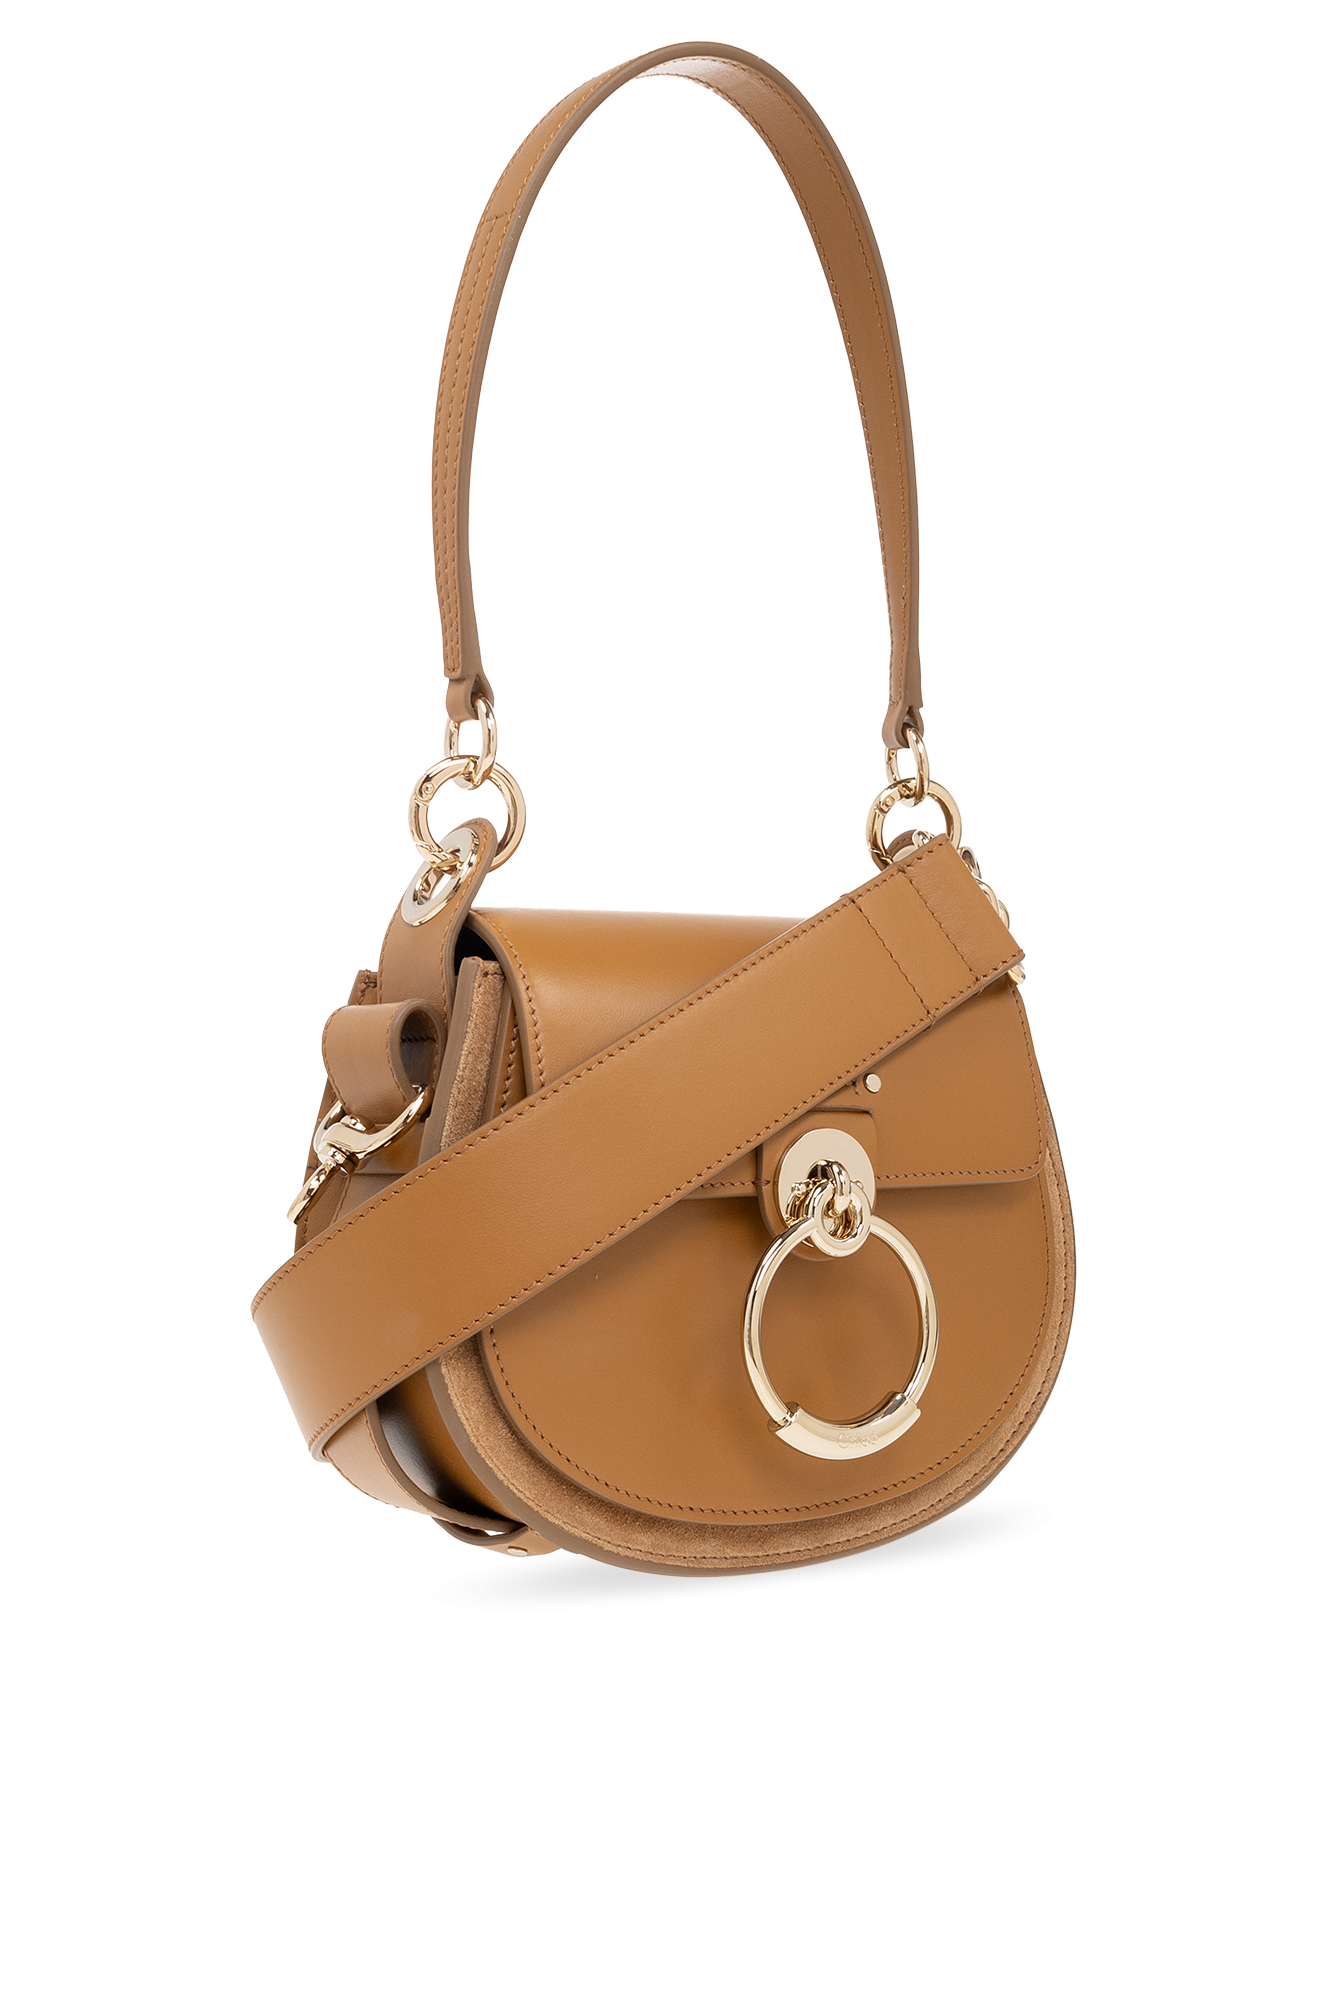 Chloé ‘Tess Small’ shoulder bag